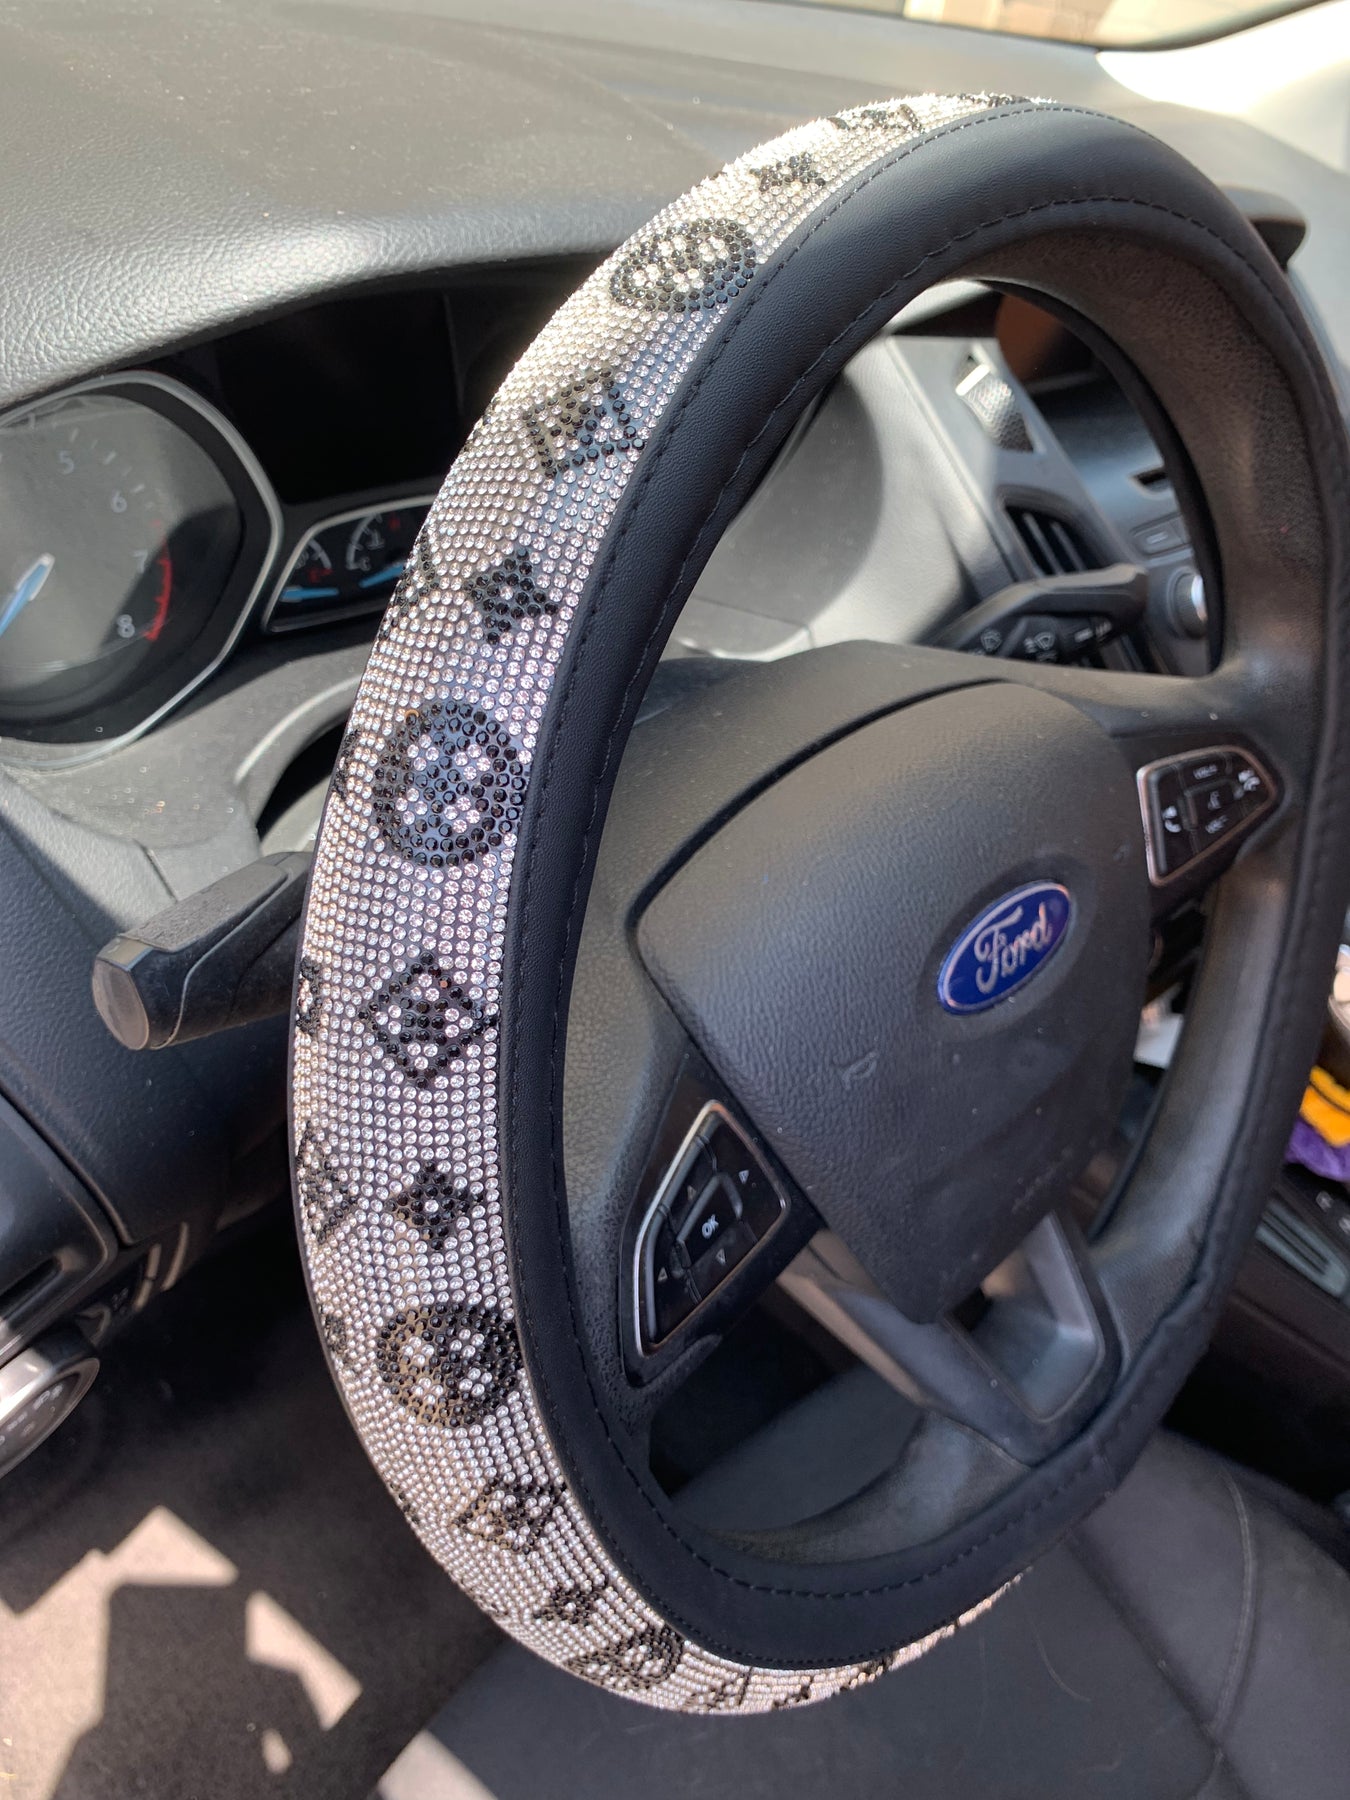 black lv steering wheel cover